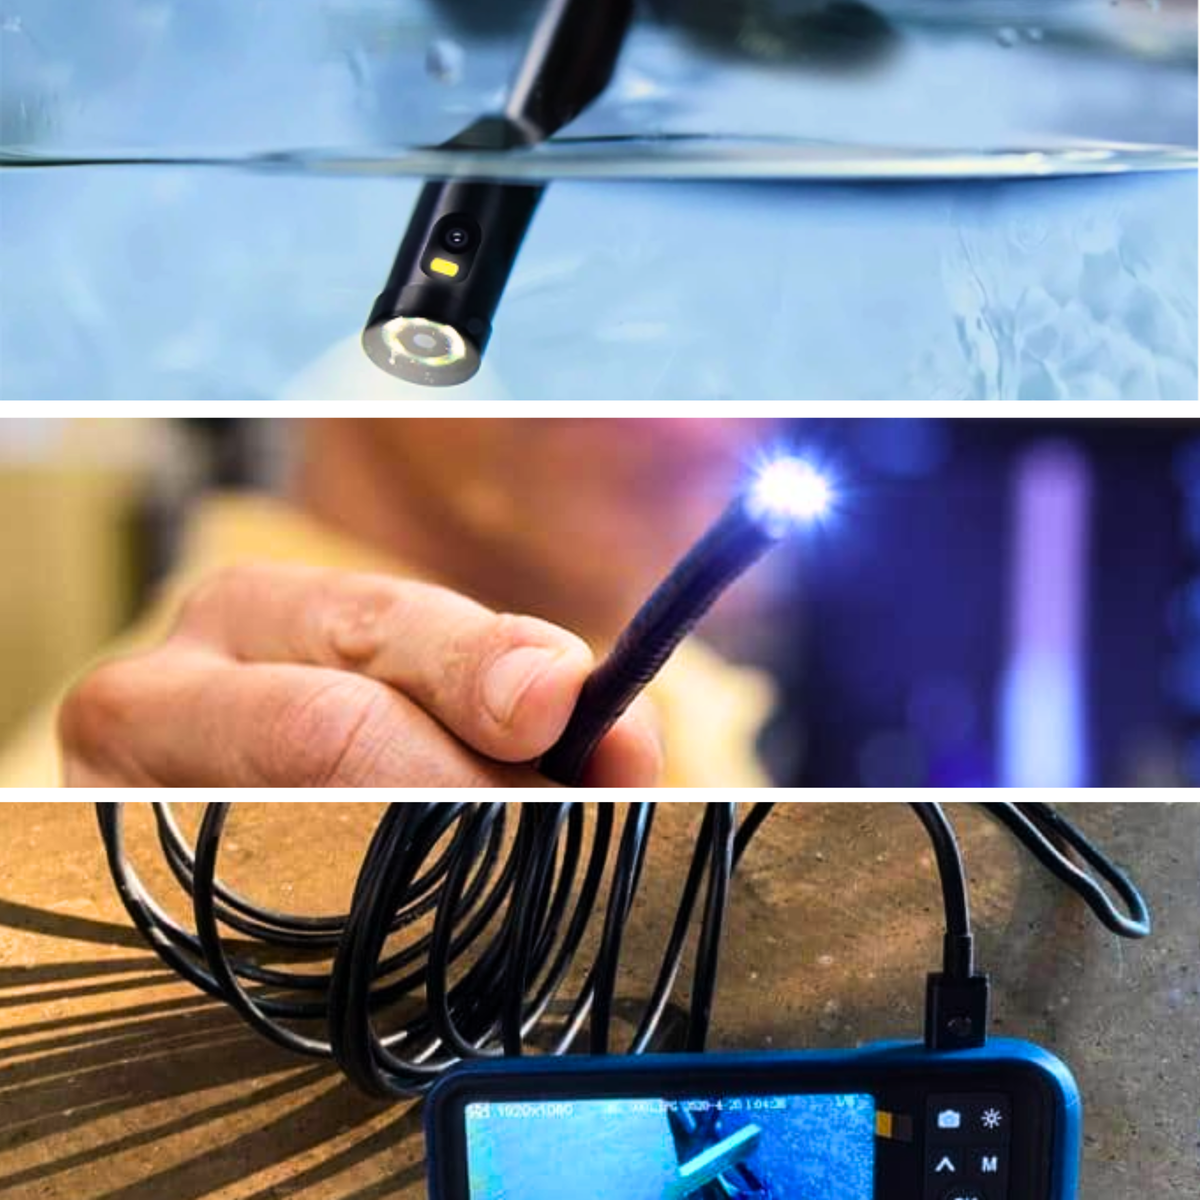 Underwater endoscope camera, endoscope with LED lights, smartphone linked to endoscope camera